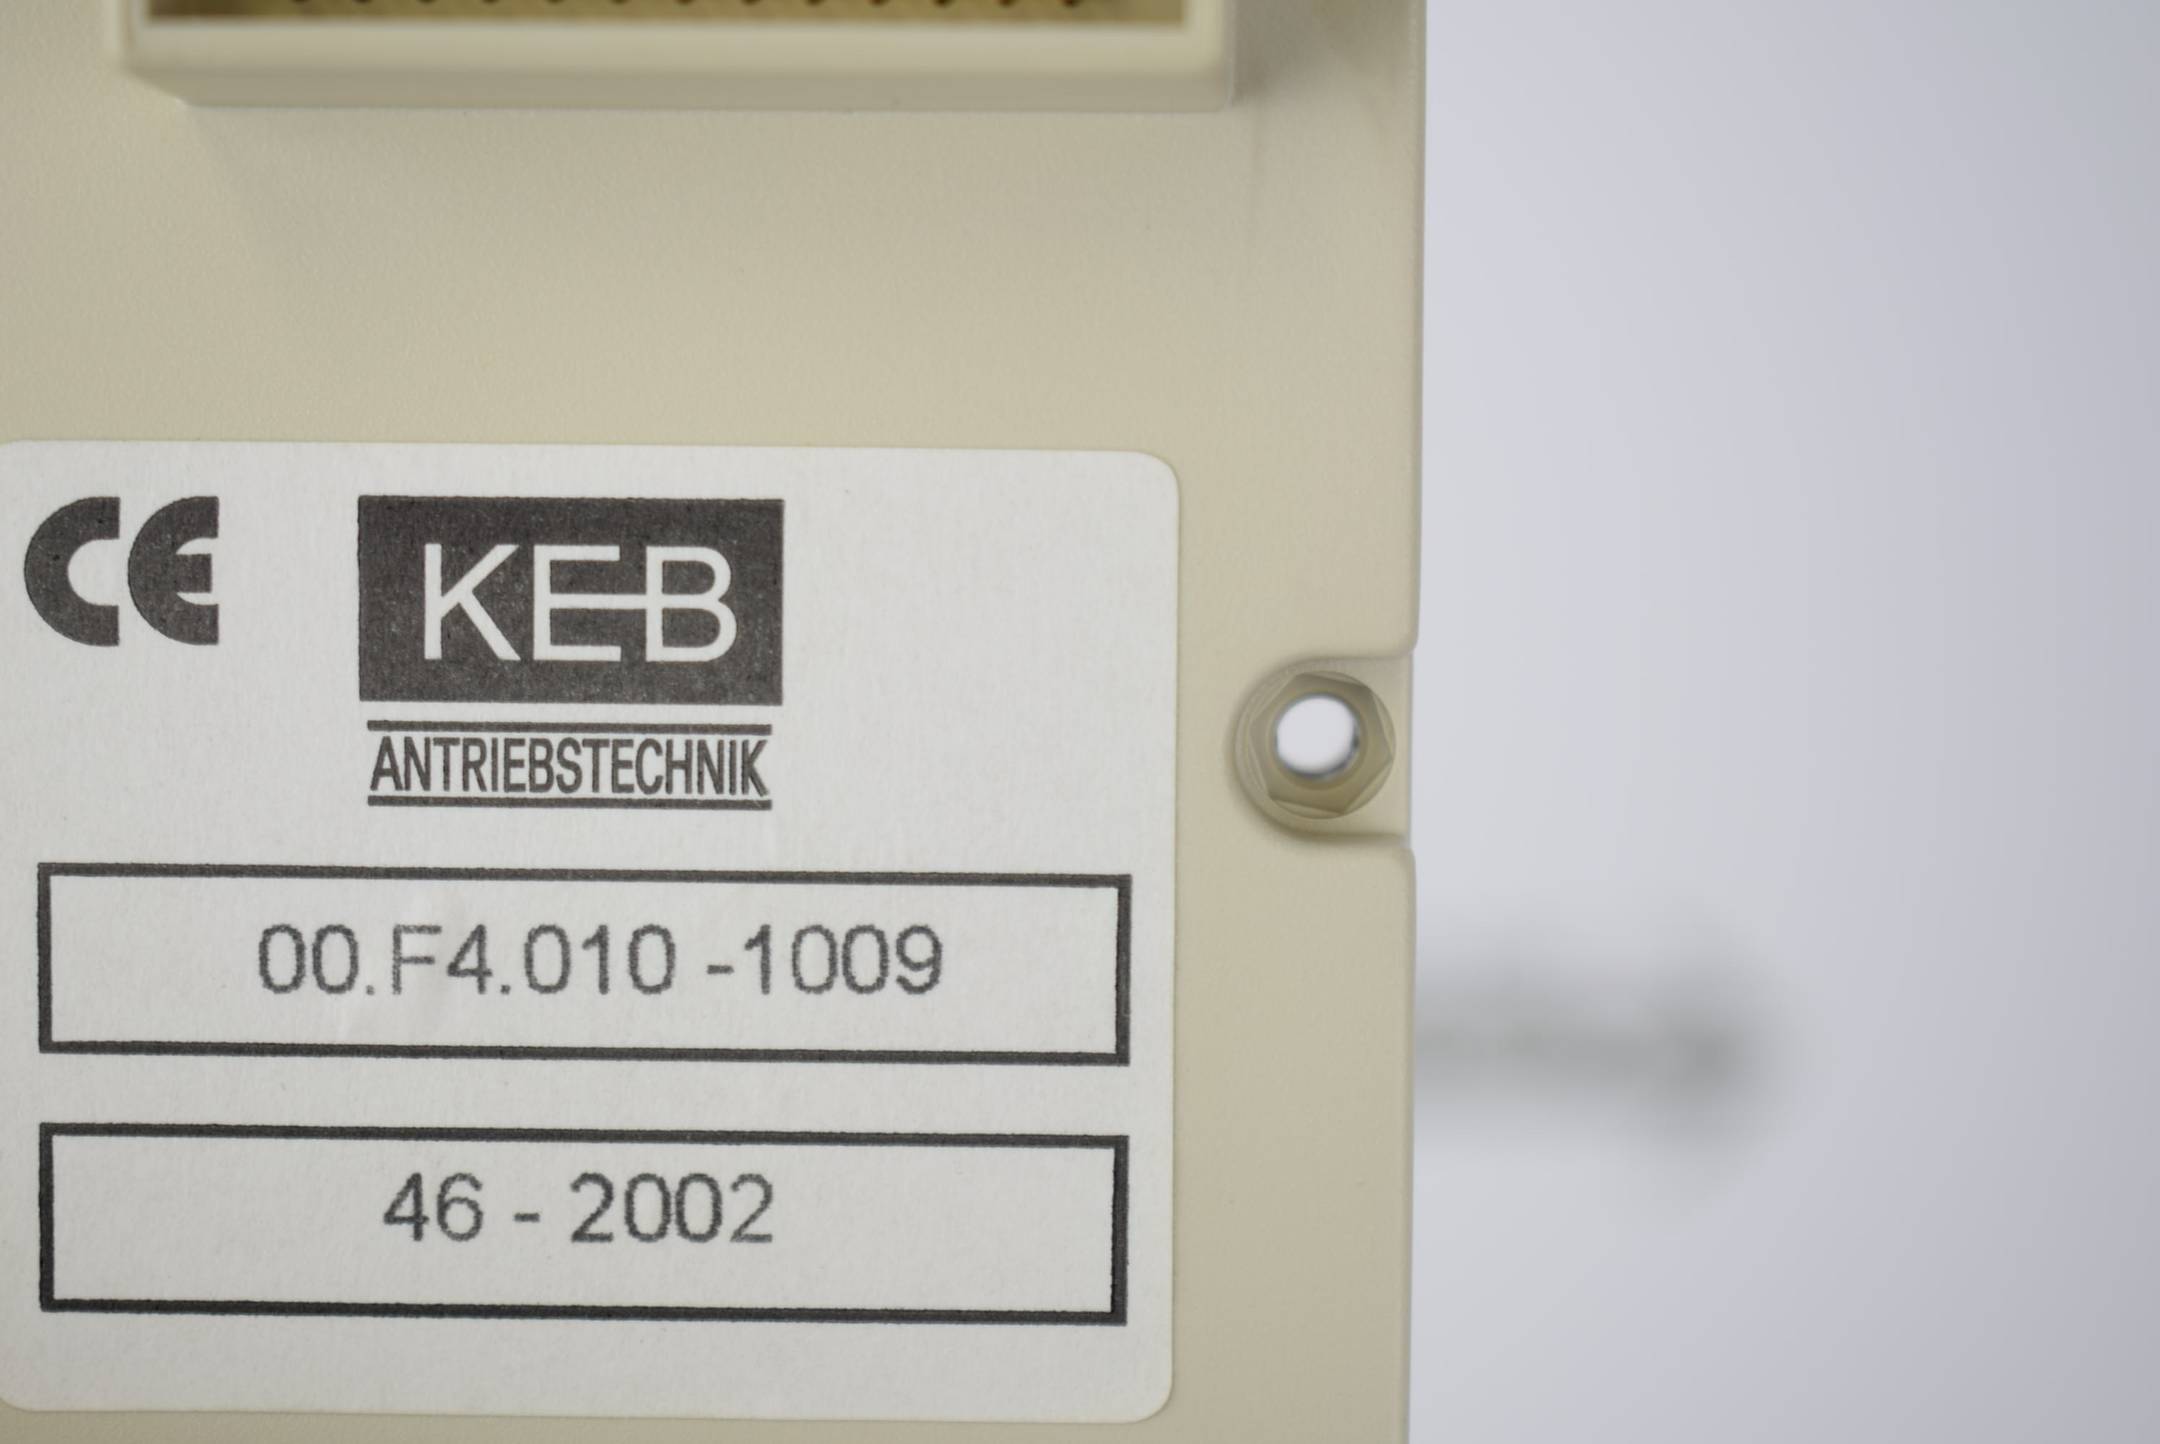 KEB Combivert F4 Drive Frequenzumrichter 15F4F1G-4R05 ( 15.F4.F1G-4R05 )